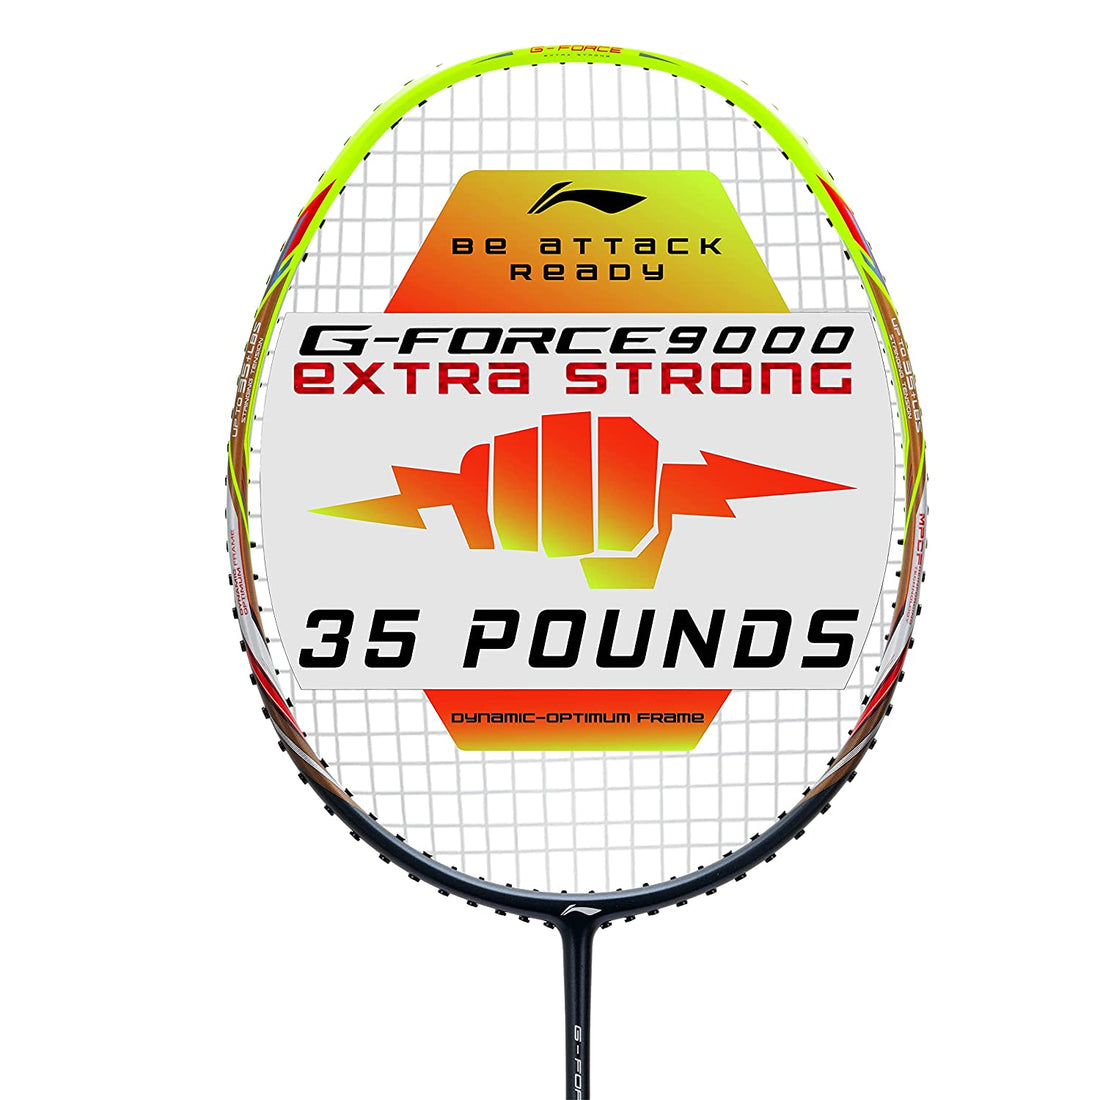 Li-Ning G Force Extra Strong 9000 Badminton Racquet - Best Price online Prokicksports.com